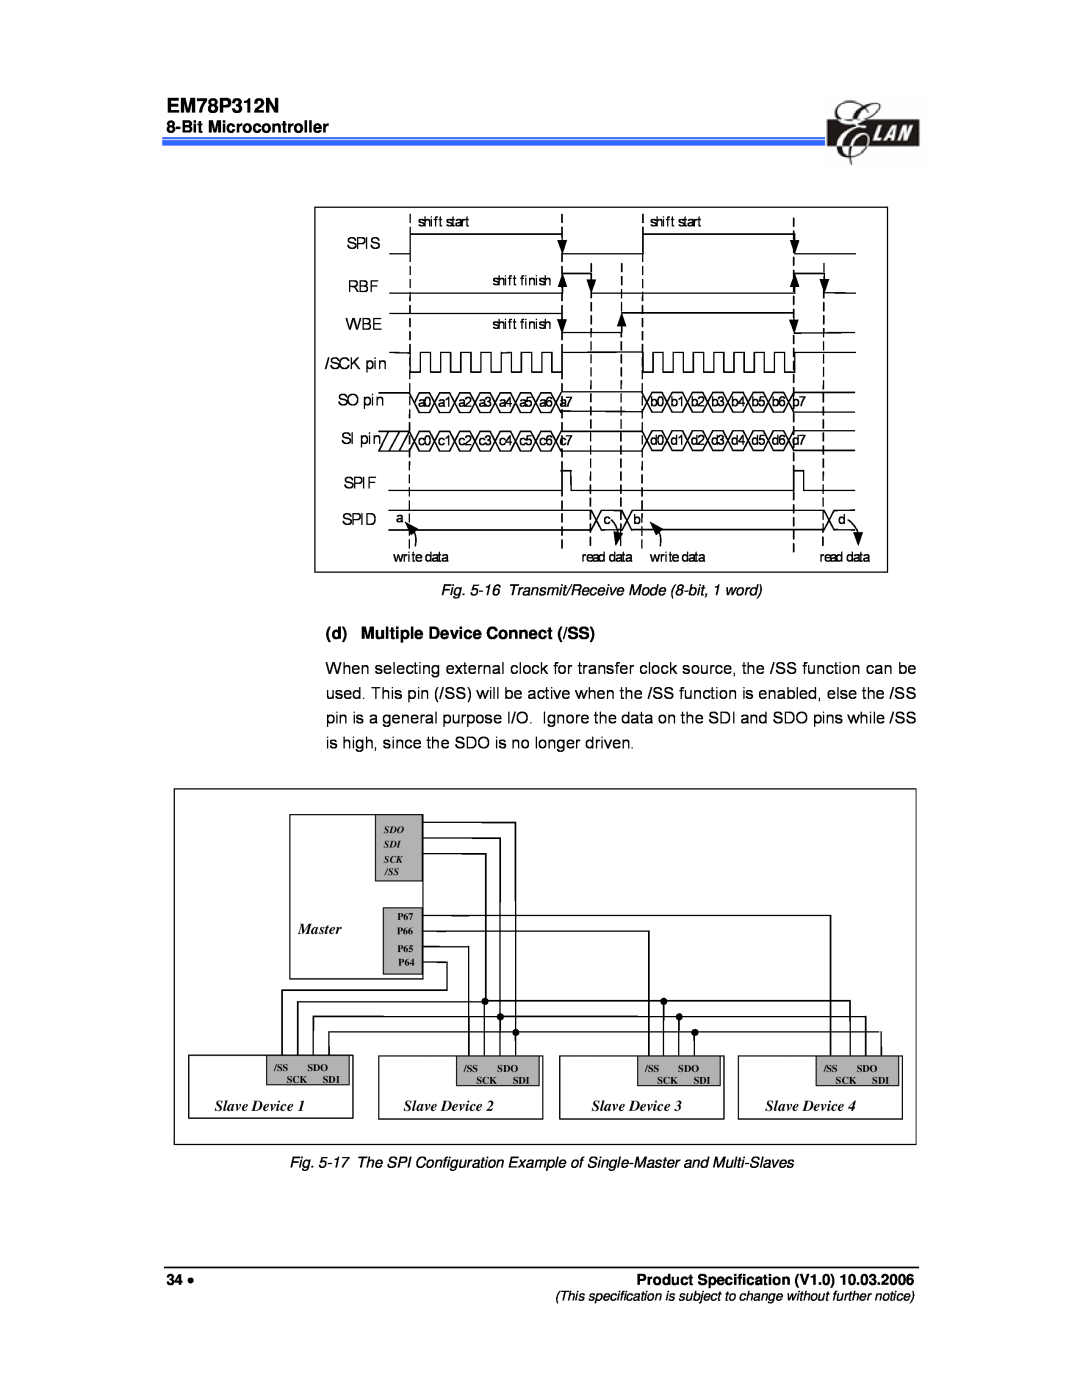 IBM EM78P312N manual Bit Microcontroller, d Multiple Device Connect /SS, SCK pin, SO pin, SI pin 